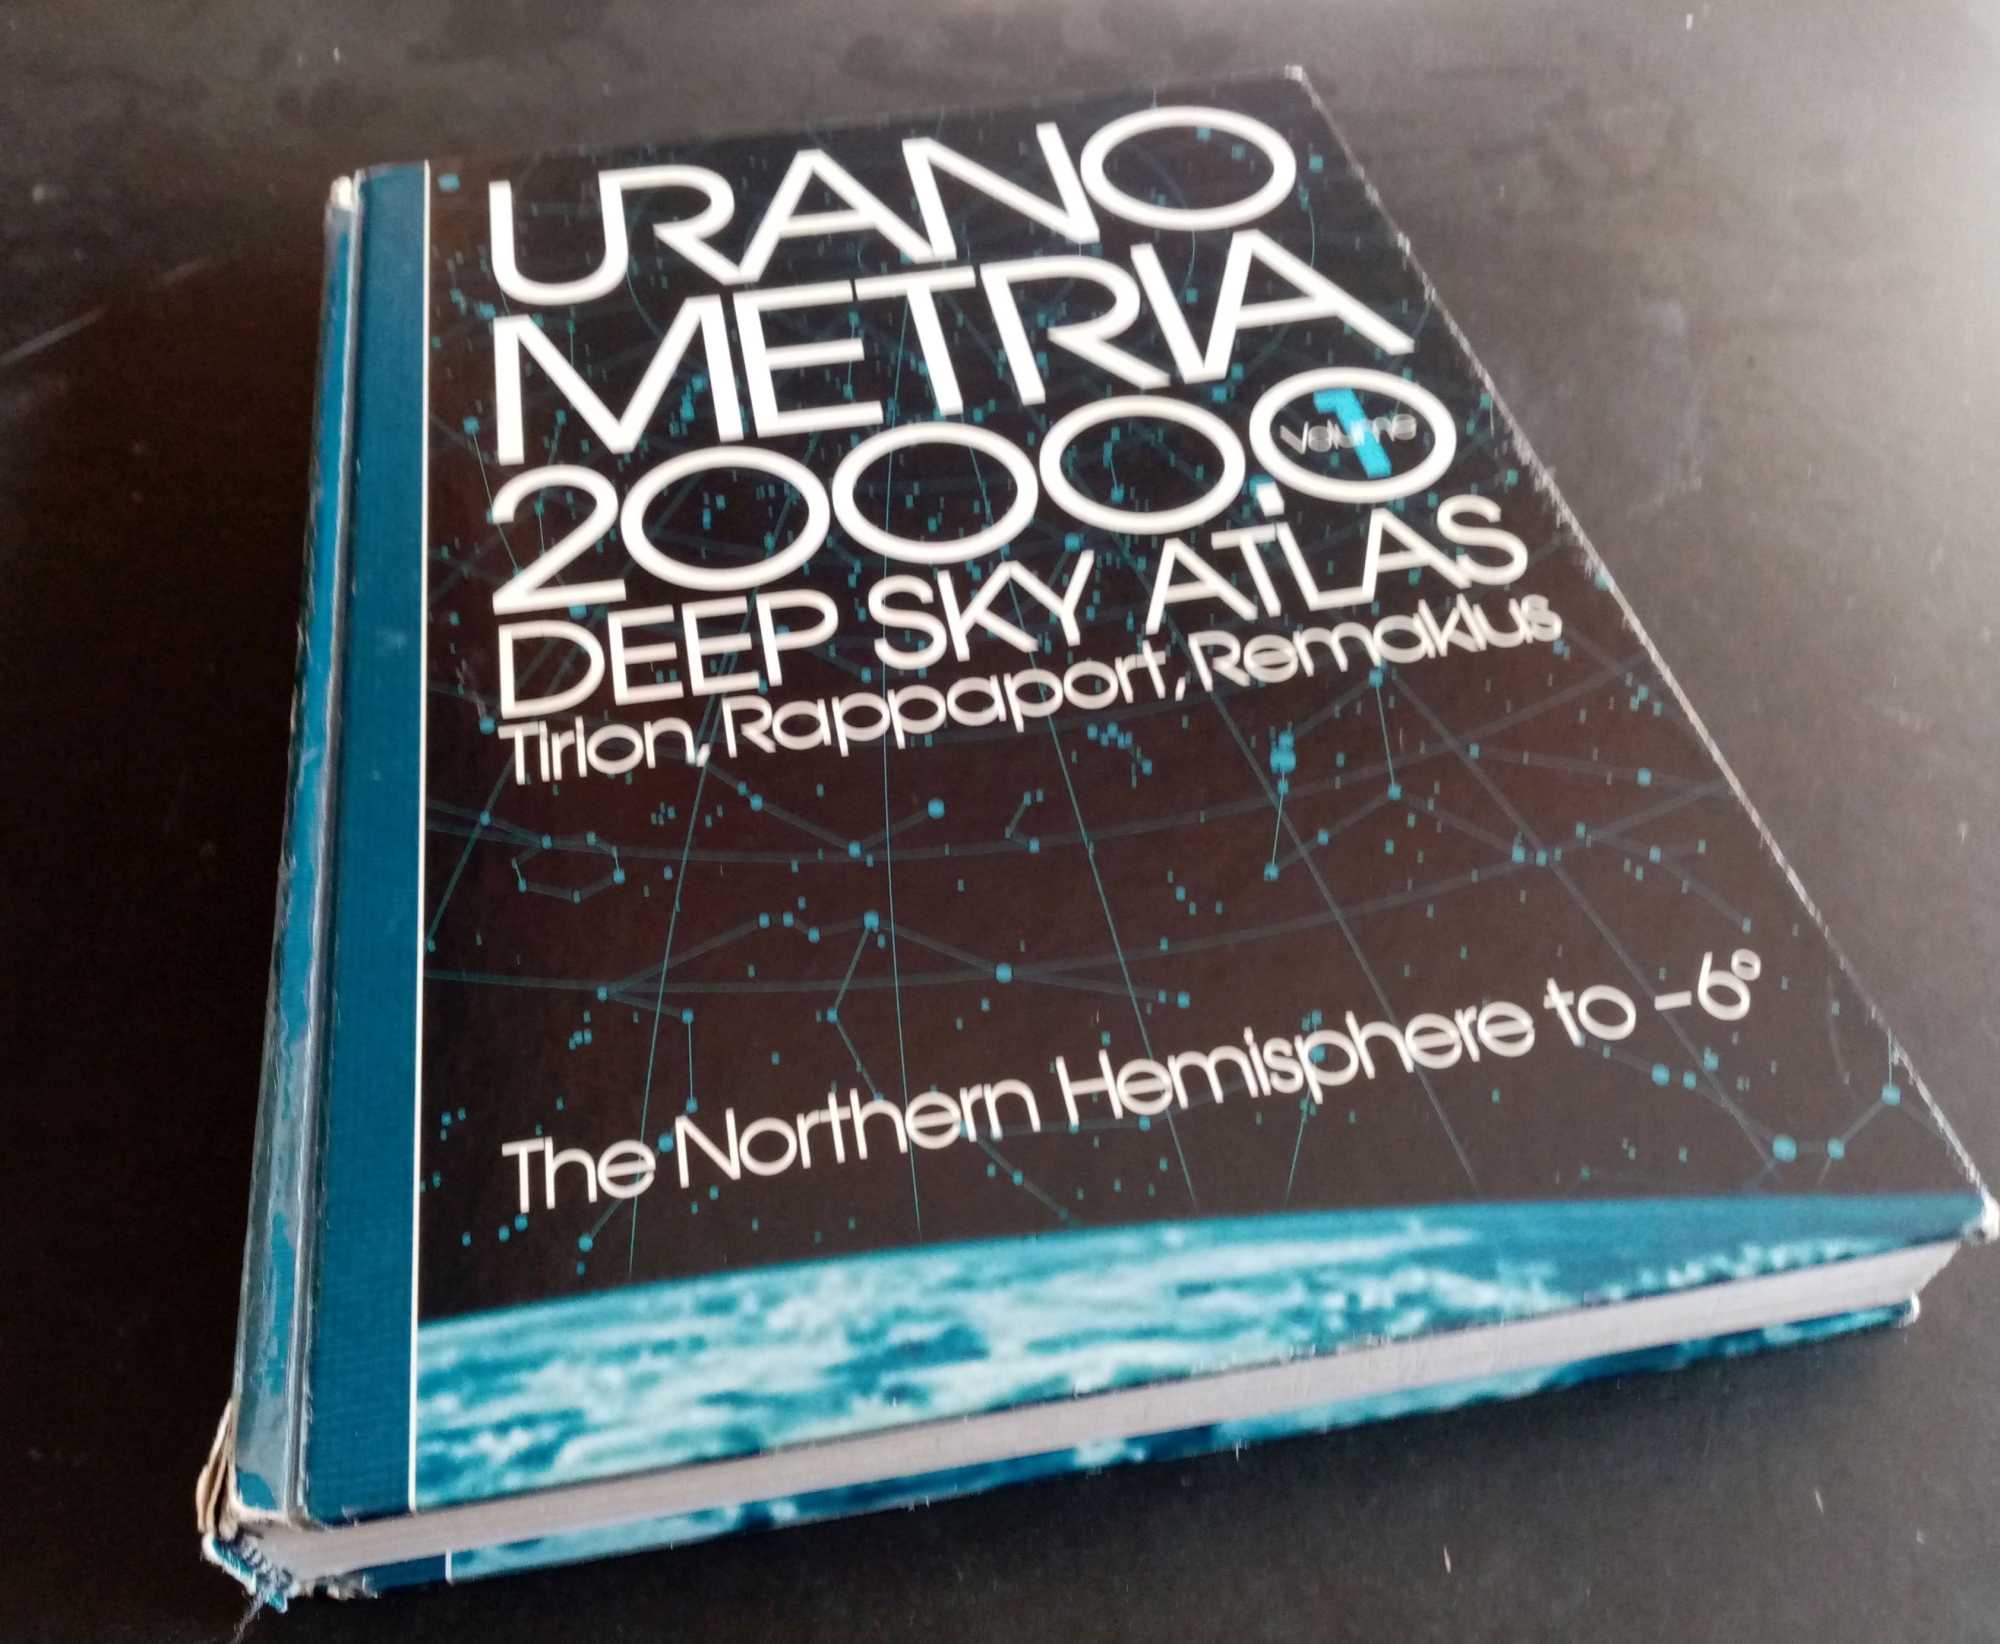 Tirion, Rappaport, Remaklus, eds. - Uranometria 2000.0: Deep Sky Atlas,  : The Northern Hemisphere to -6 Degrees